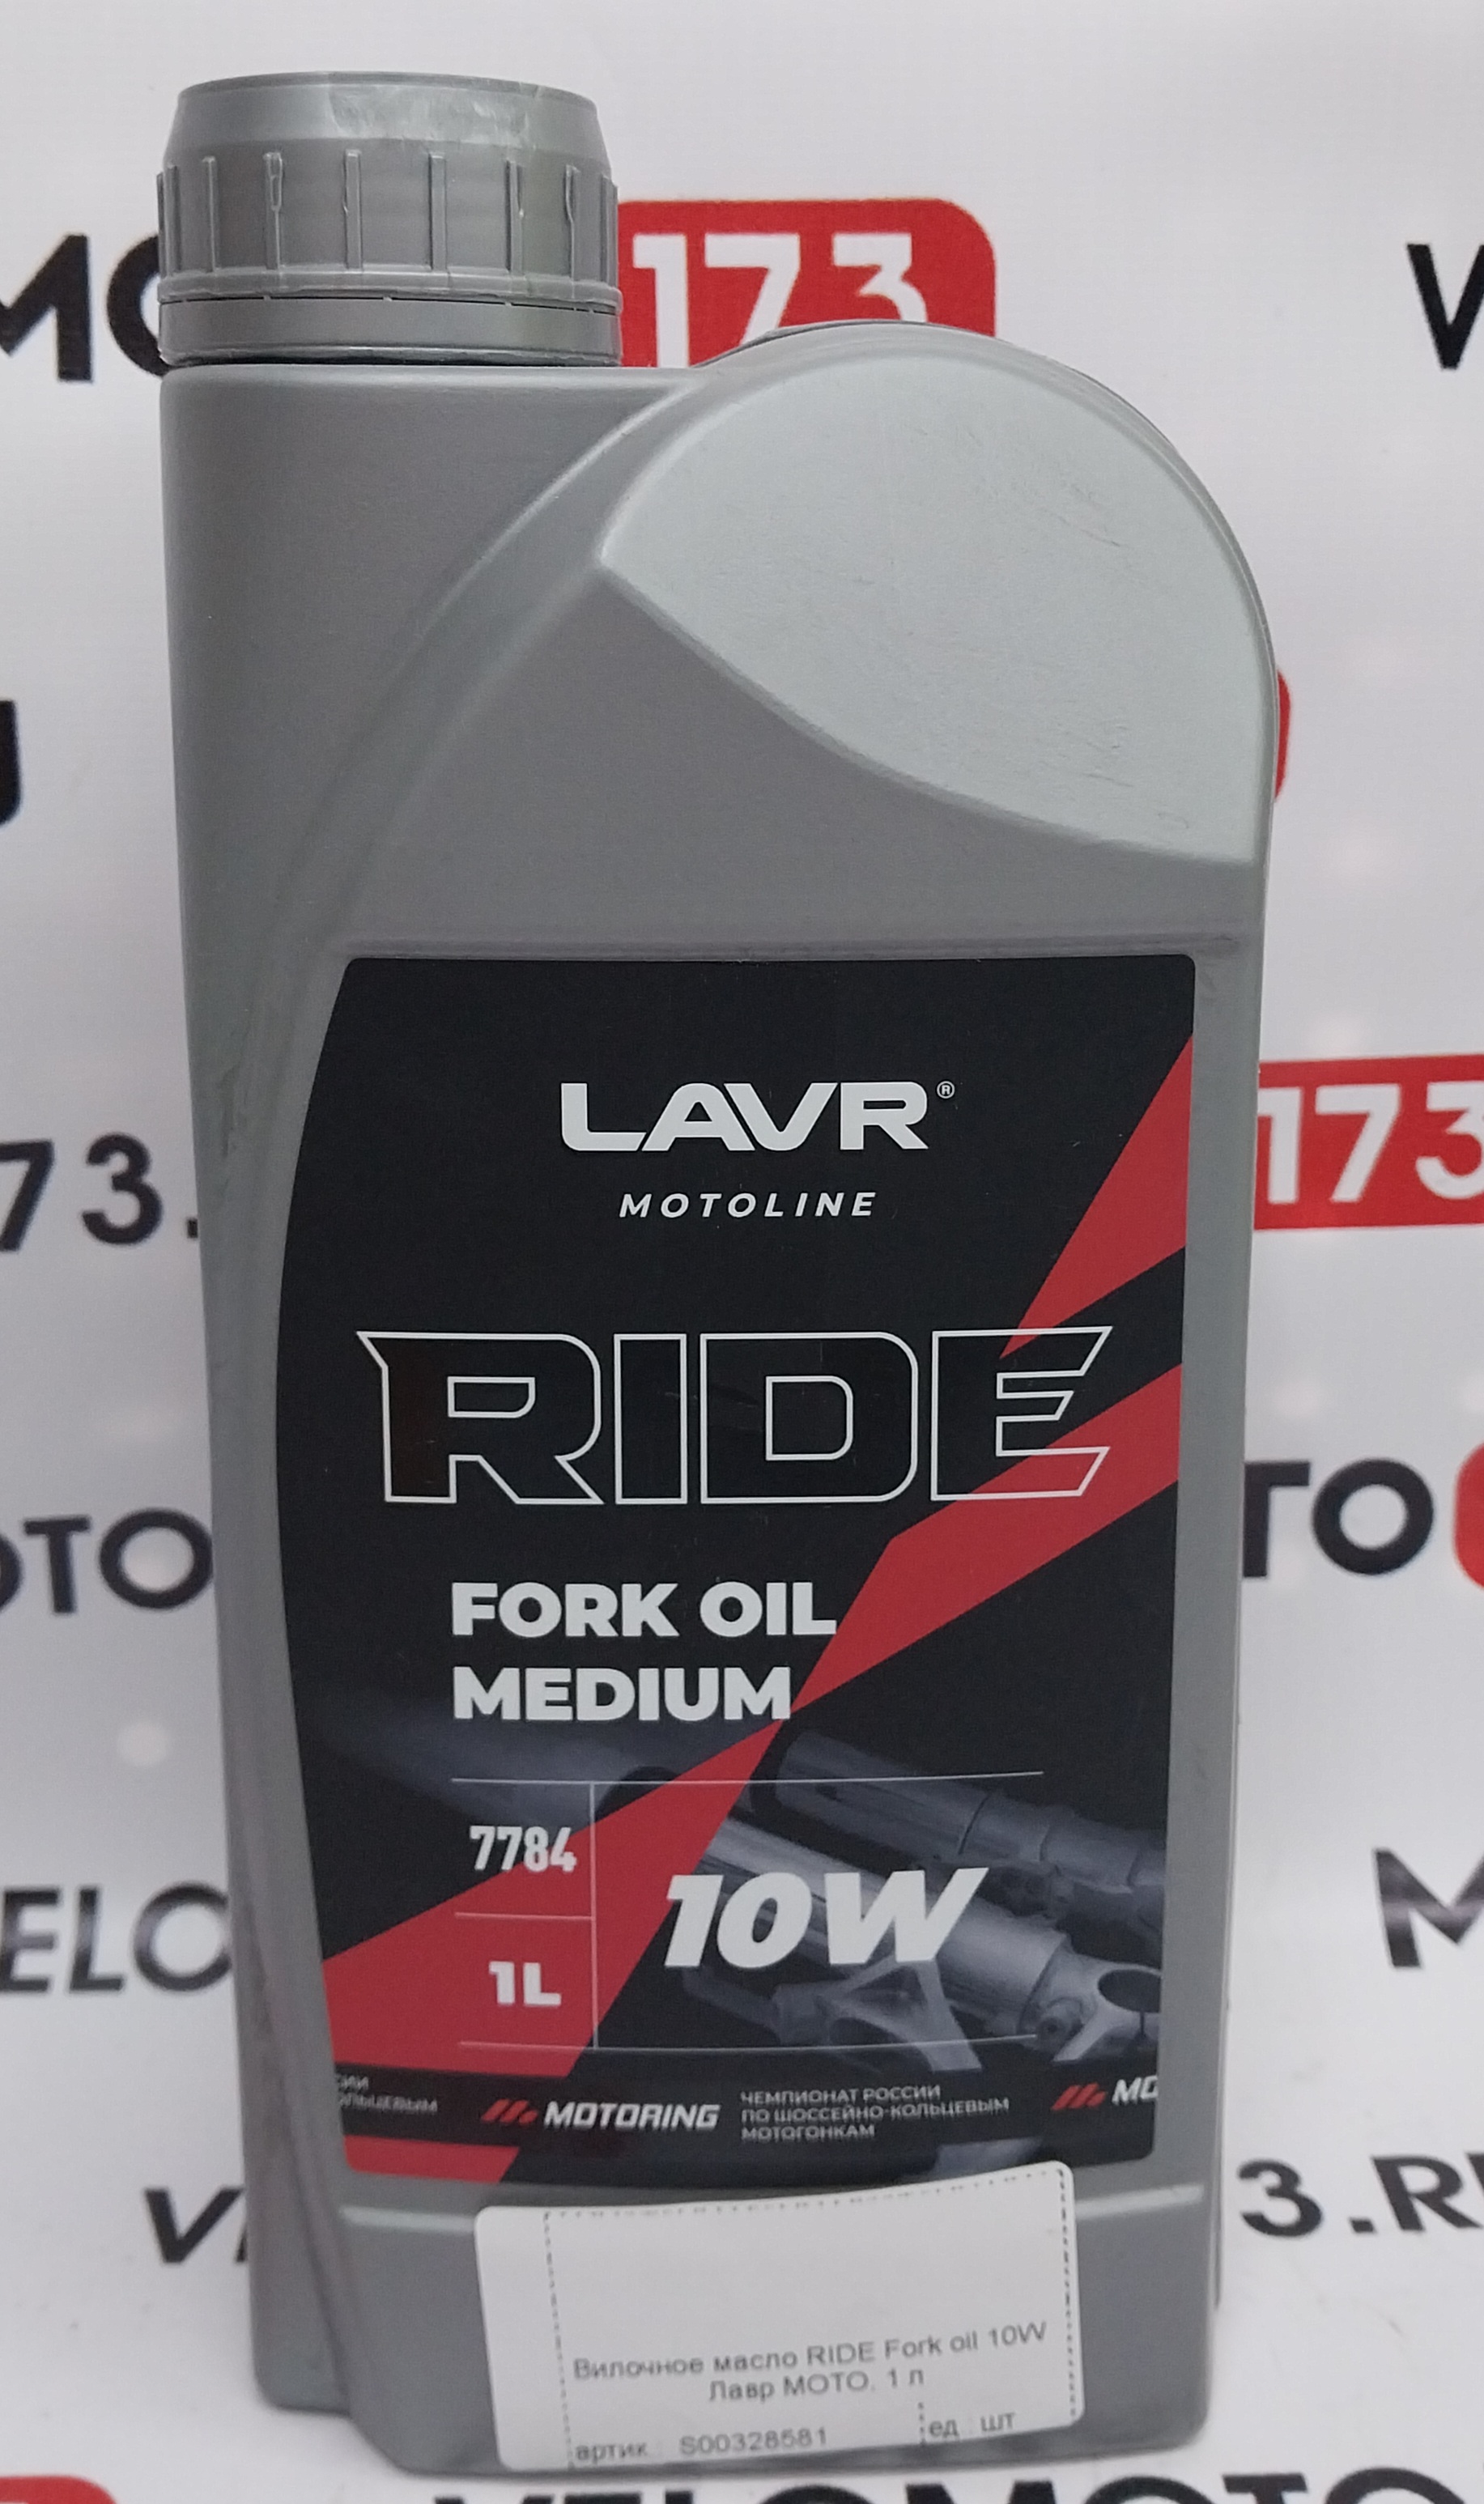 Вилочное масло RIDE Fork oil 10W Лавр МОТО, 1 л